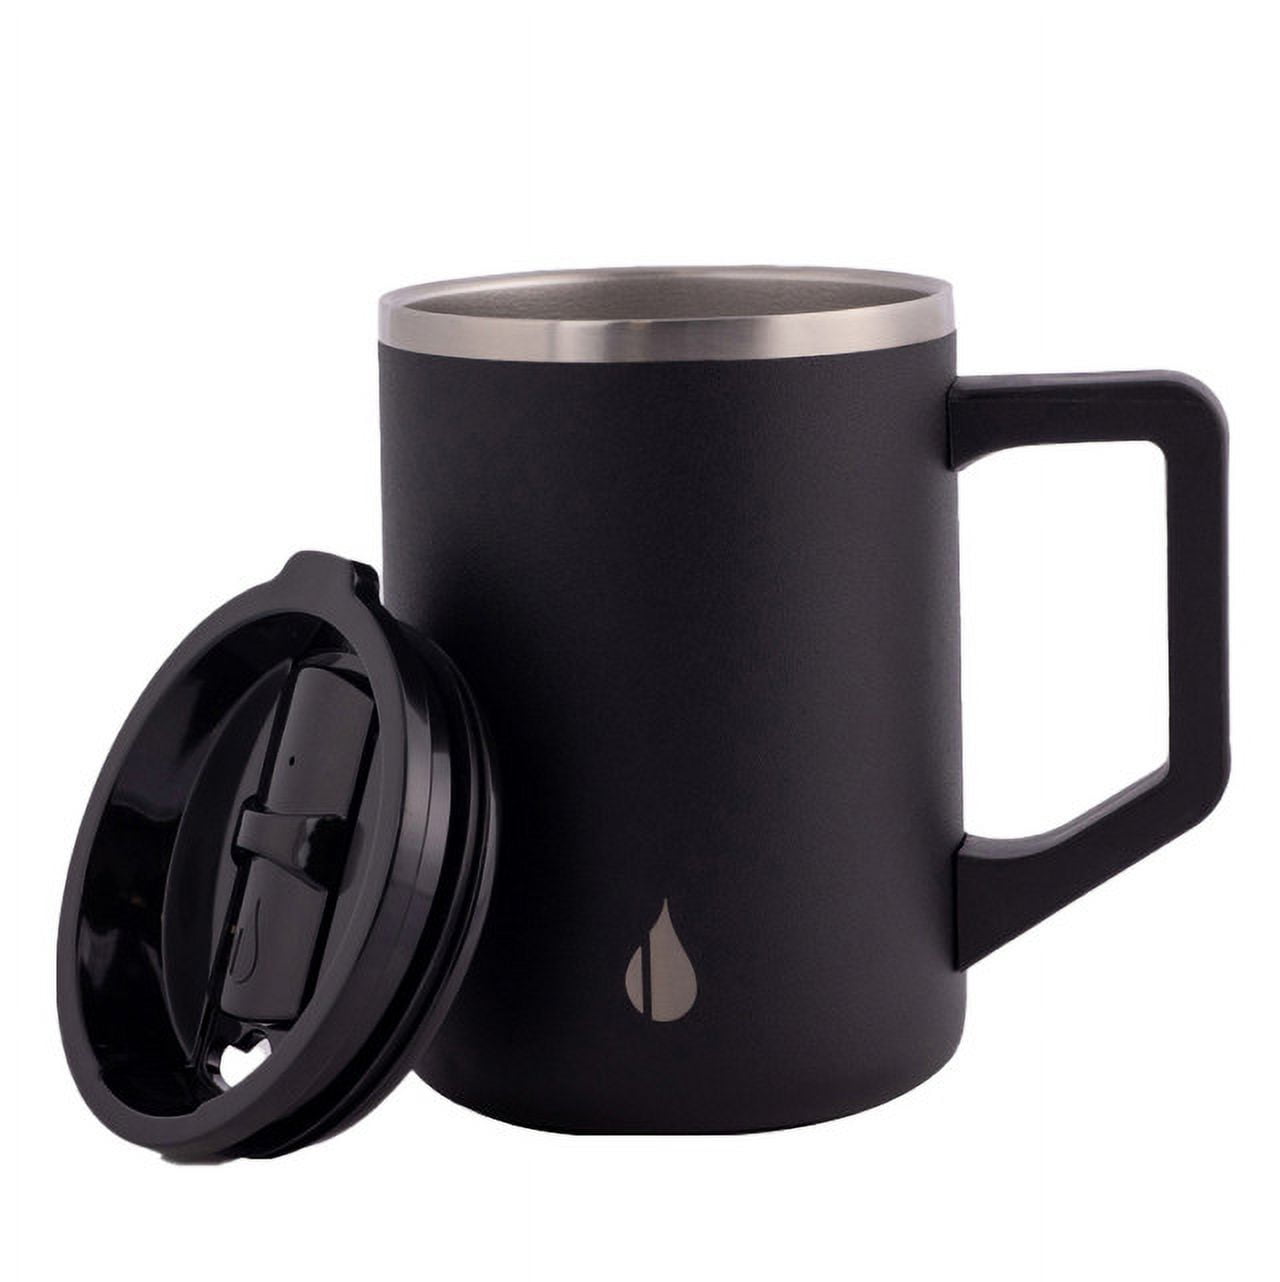 Yeti Black Camping Coffee Tea Cup Aluminum Insulation NO LID Logo